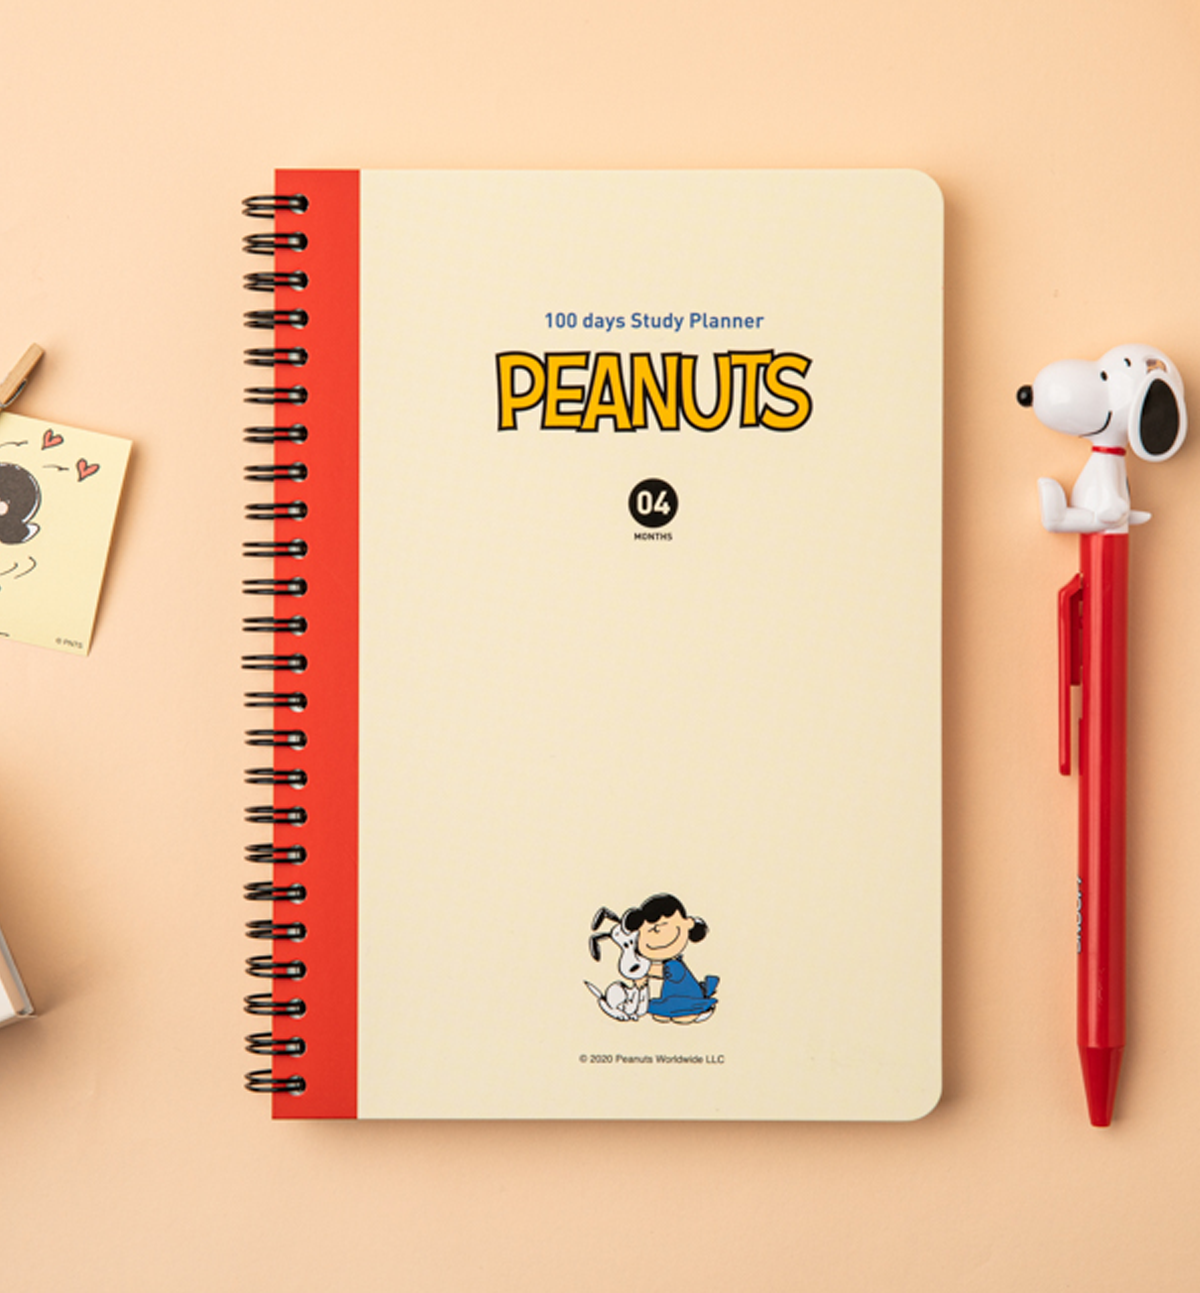 Cute Kawaii Snoopy Candy Grab Mini Notepad / Memo Pad - Stationery Des –  Alwayz Kawaii